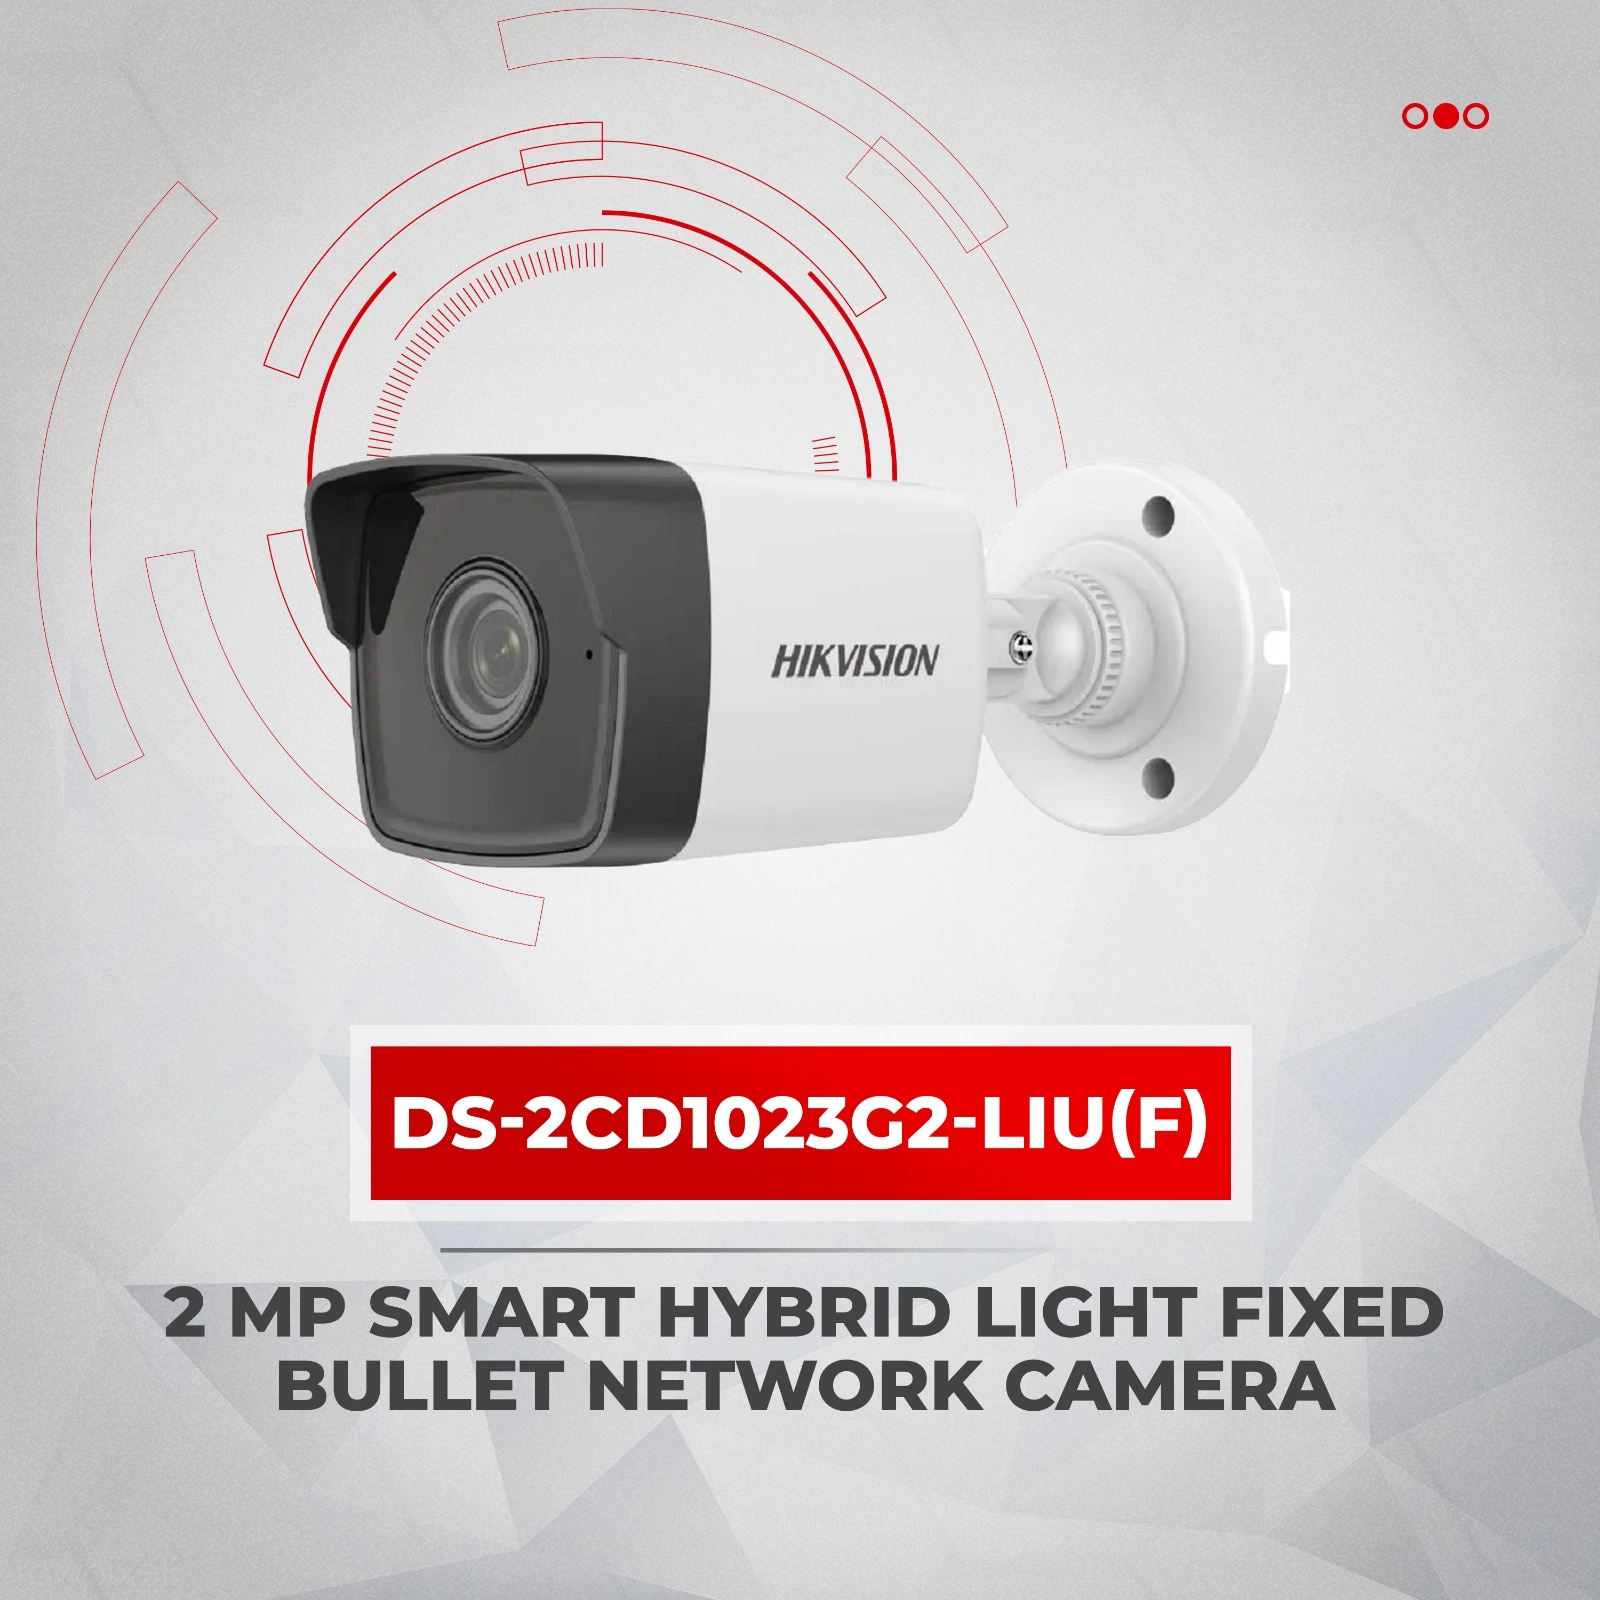 2 mp smart hybrid light fixed bullet network camerahikvision cctv security surveillance camera 